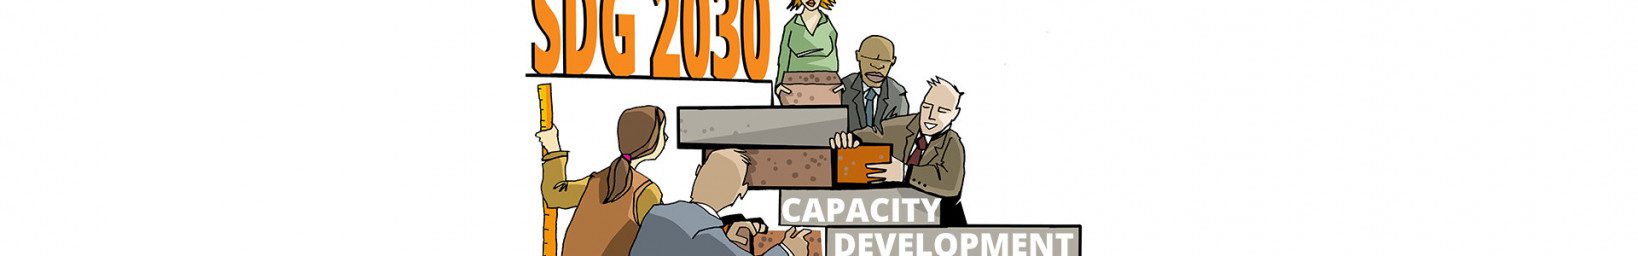 Capacity Development online course